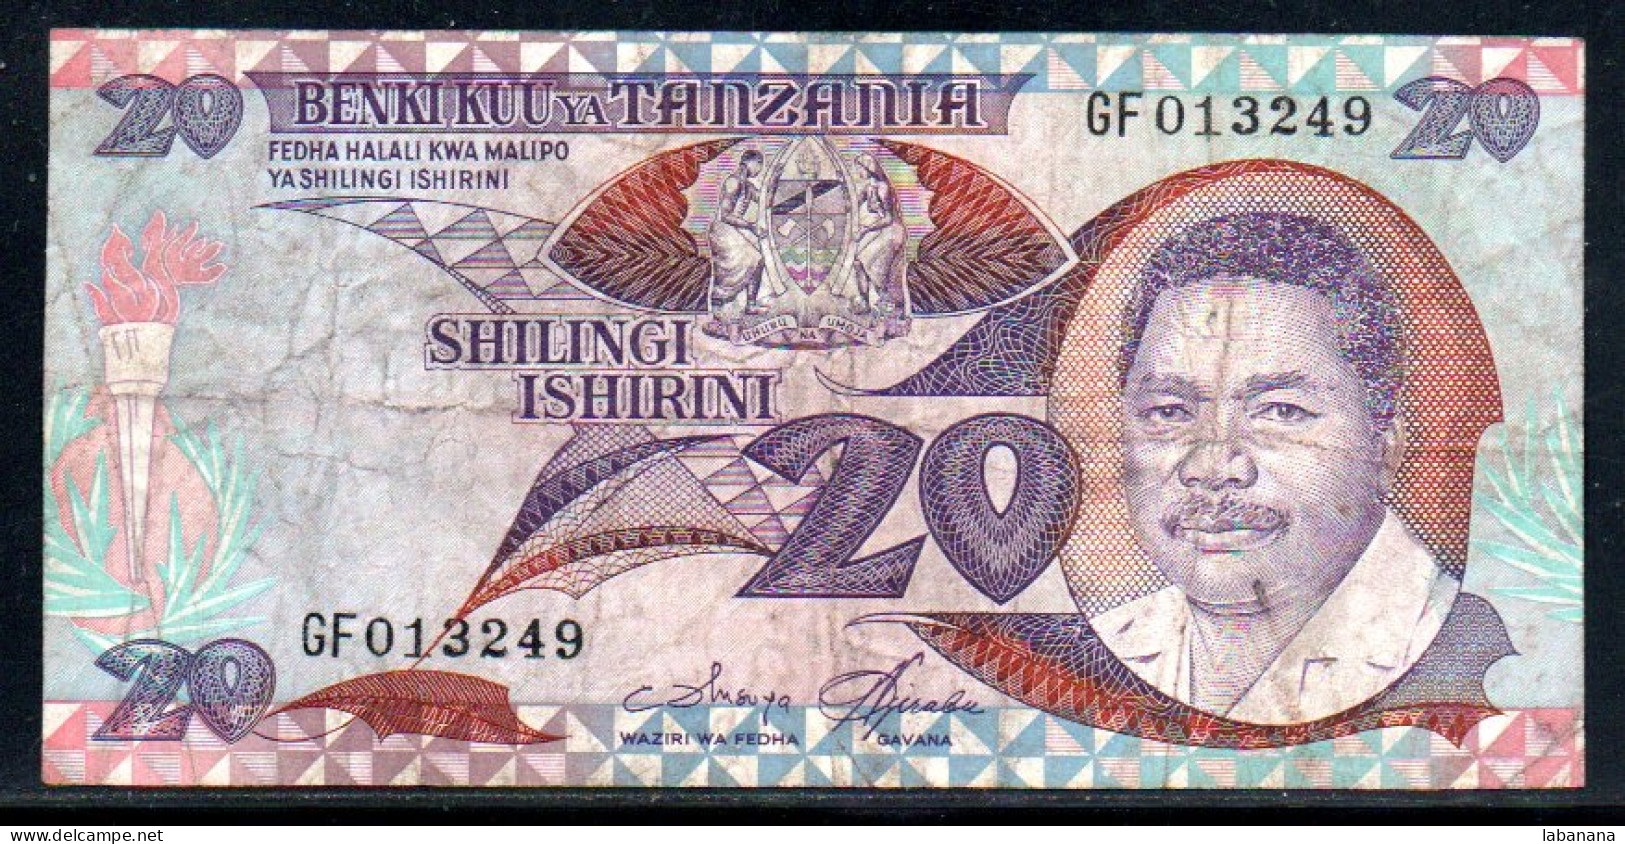 329-Tanzanie 20 Shilingi 1987 GF013 - Tansania